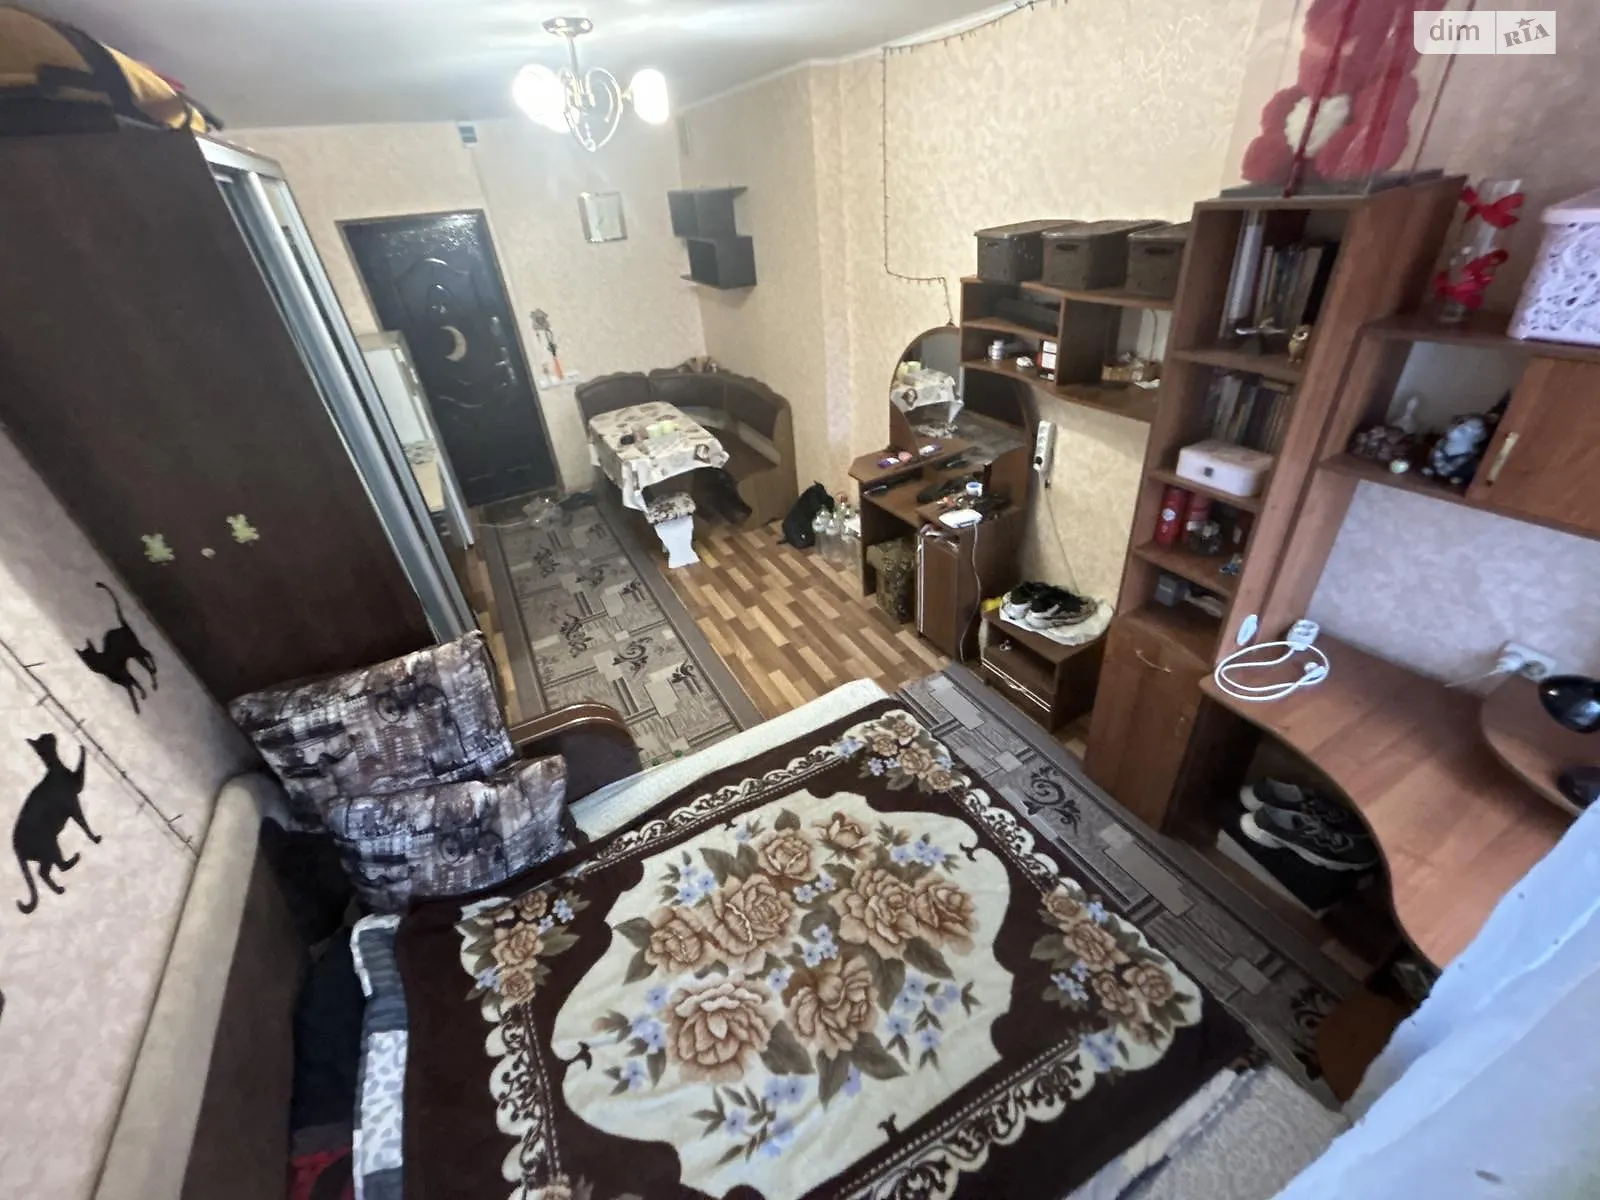 Продается комната 16.3 кв. м в Николаеве - фото 4